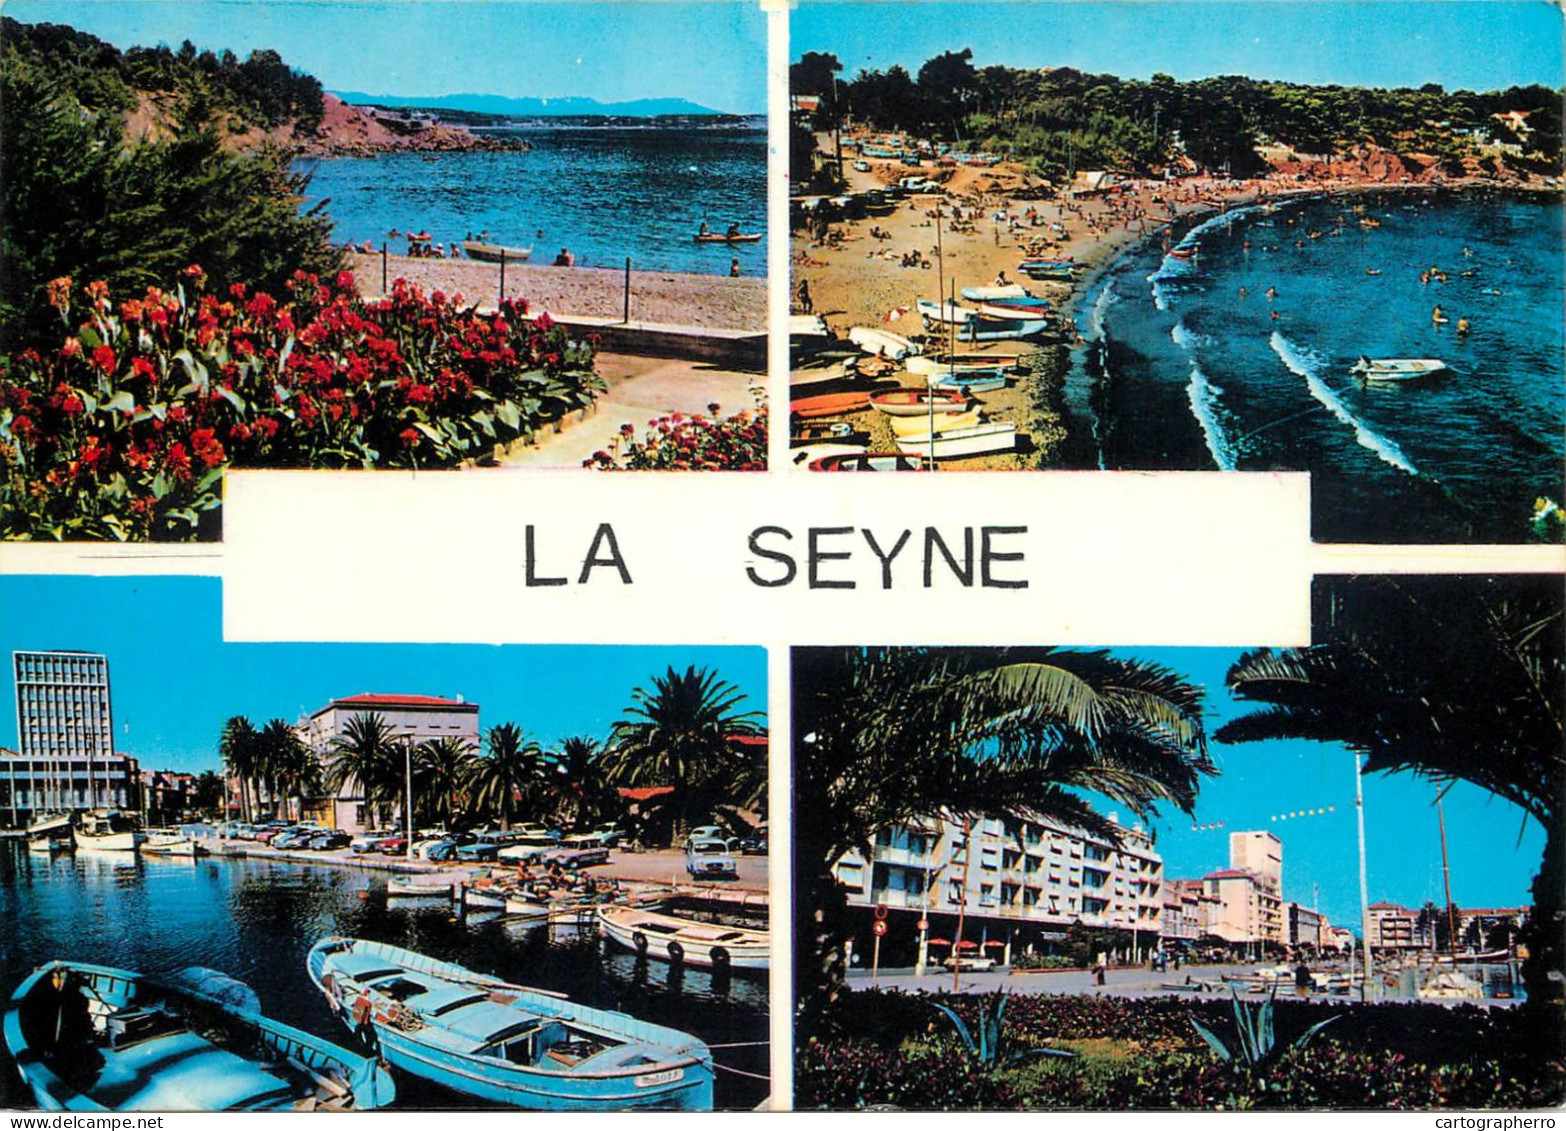 Navigation Sailing Vessels & Boats Themed Postcard La Seyne - Sailing Vessels